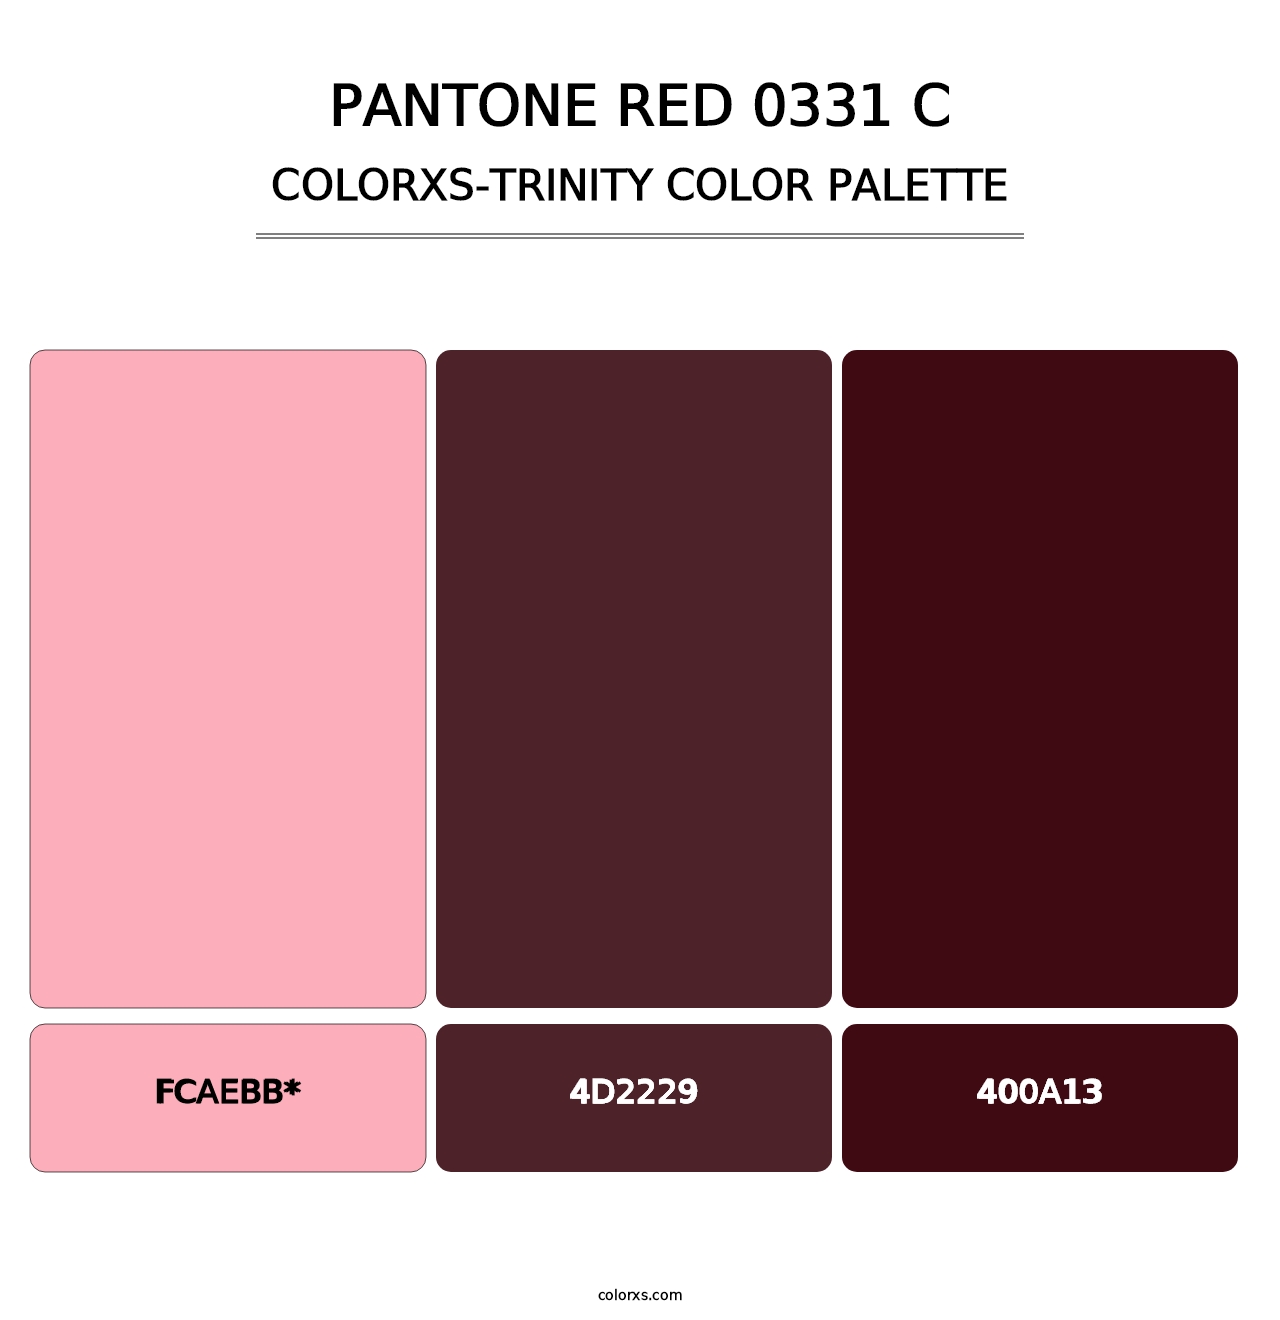 PANTONE Red 0331 C - Colorxs Trinity Palette